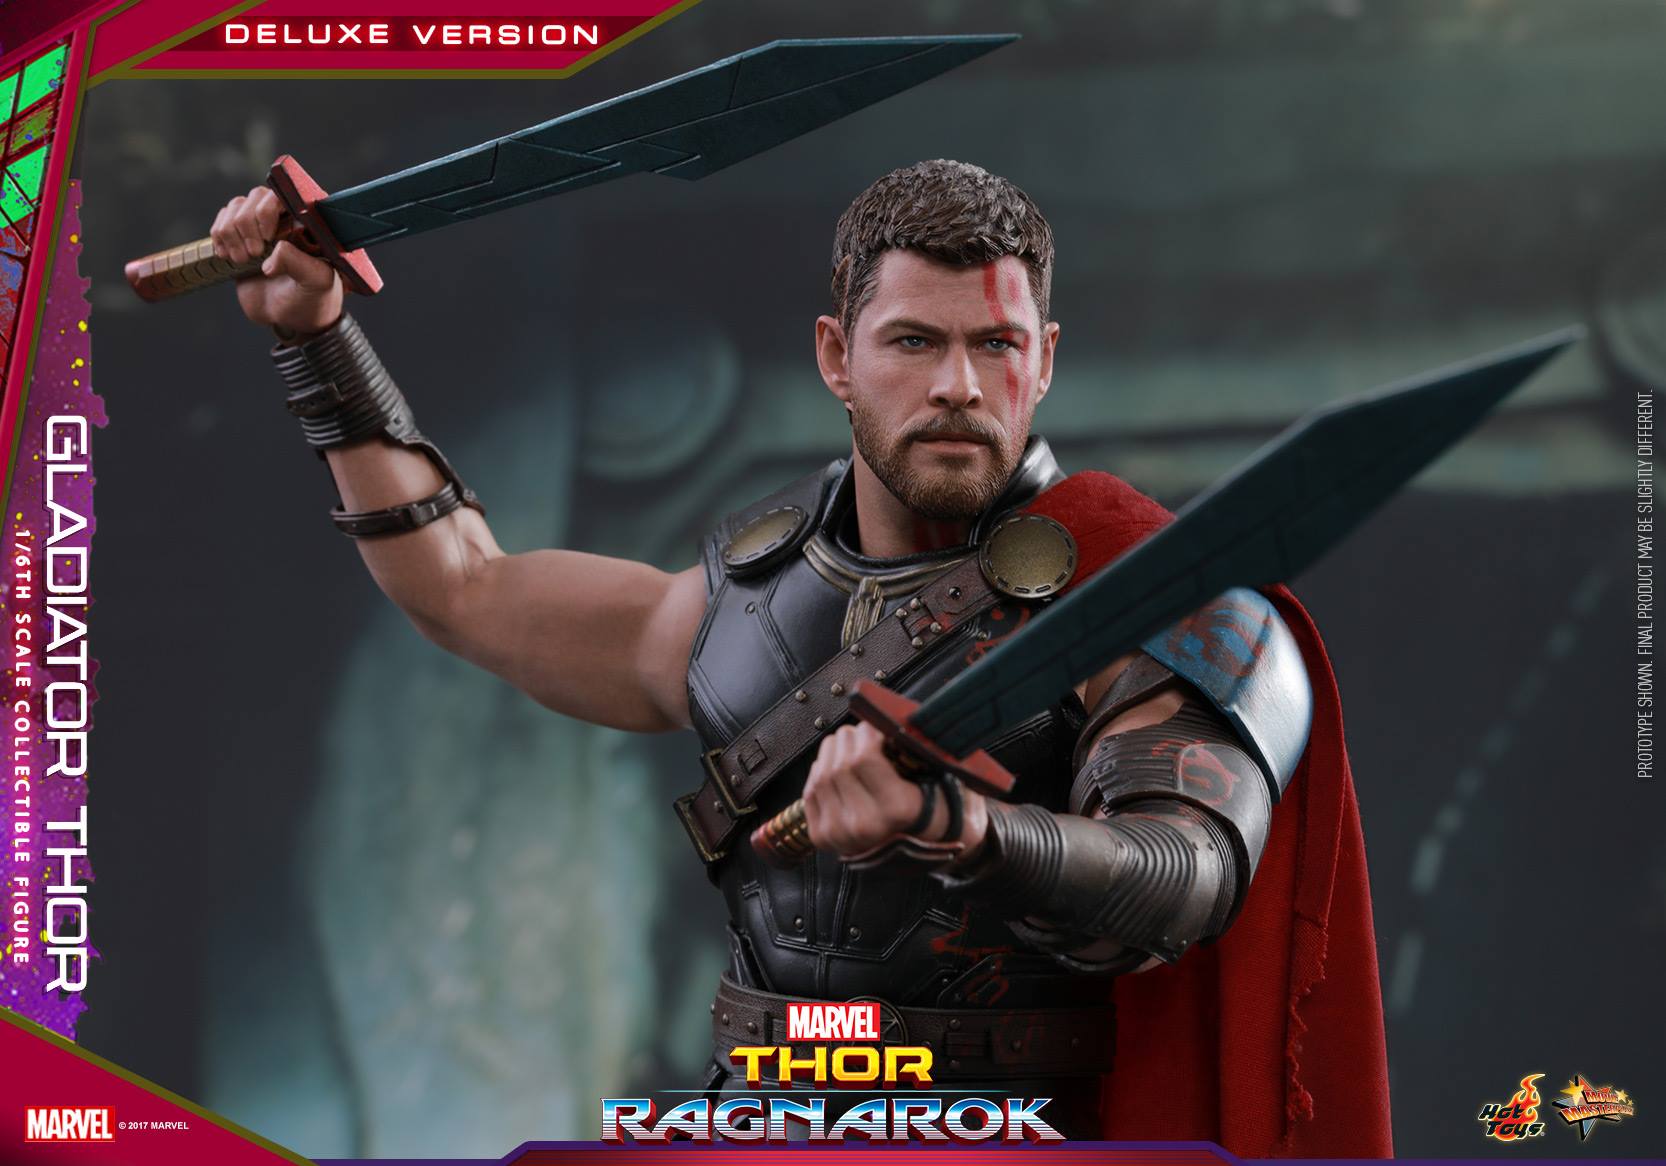 instal the last version for ios Thor: Ragnarok